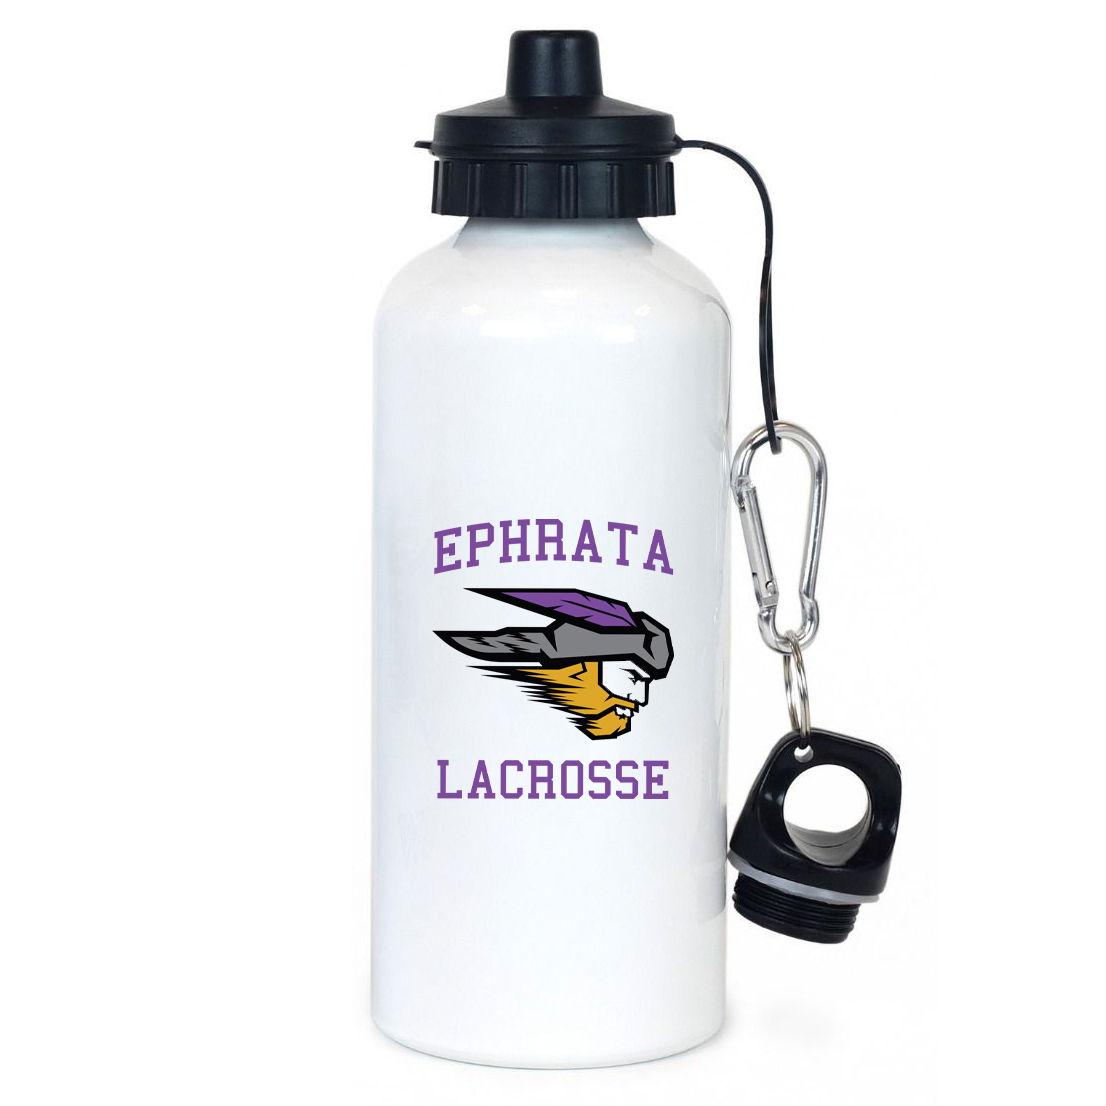 Ephrata Lacrosse Team Water Bottle